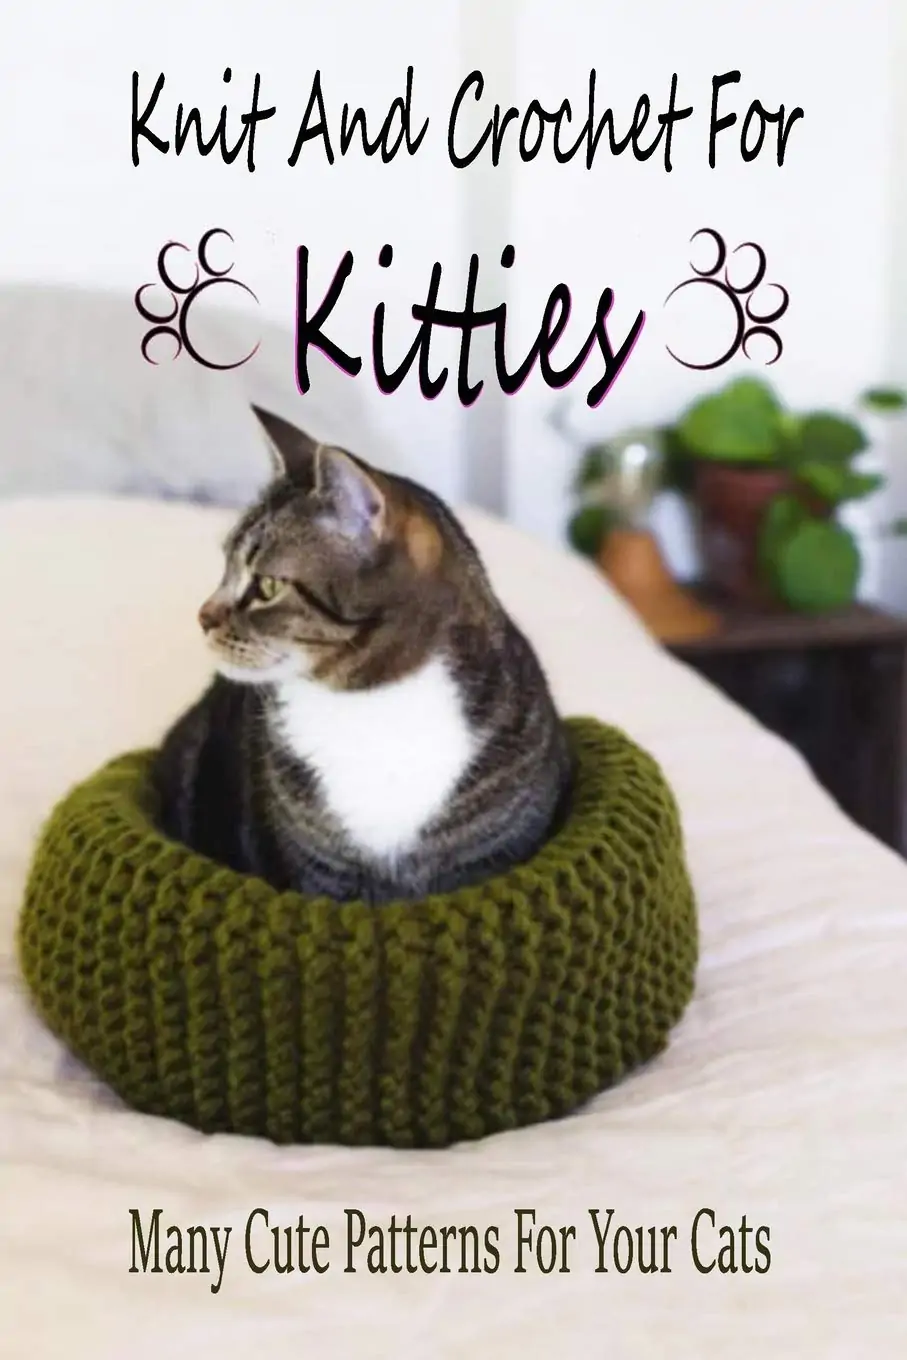 Cute cat crochet patterns book